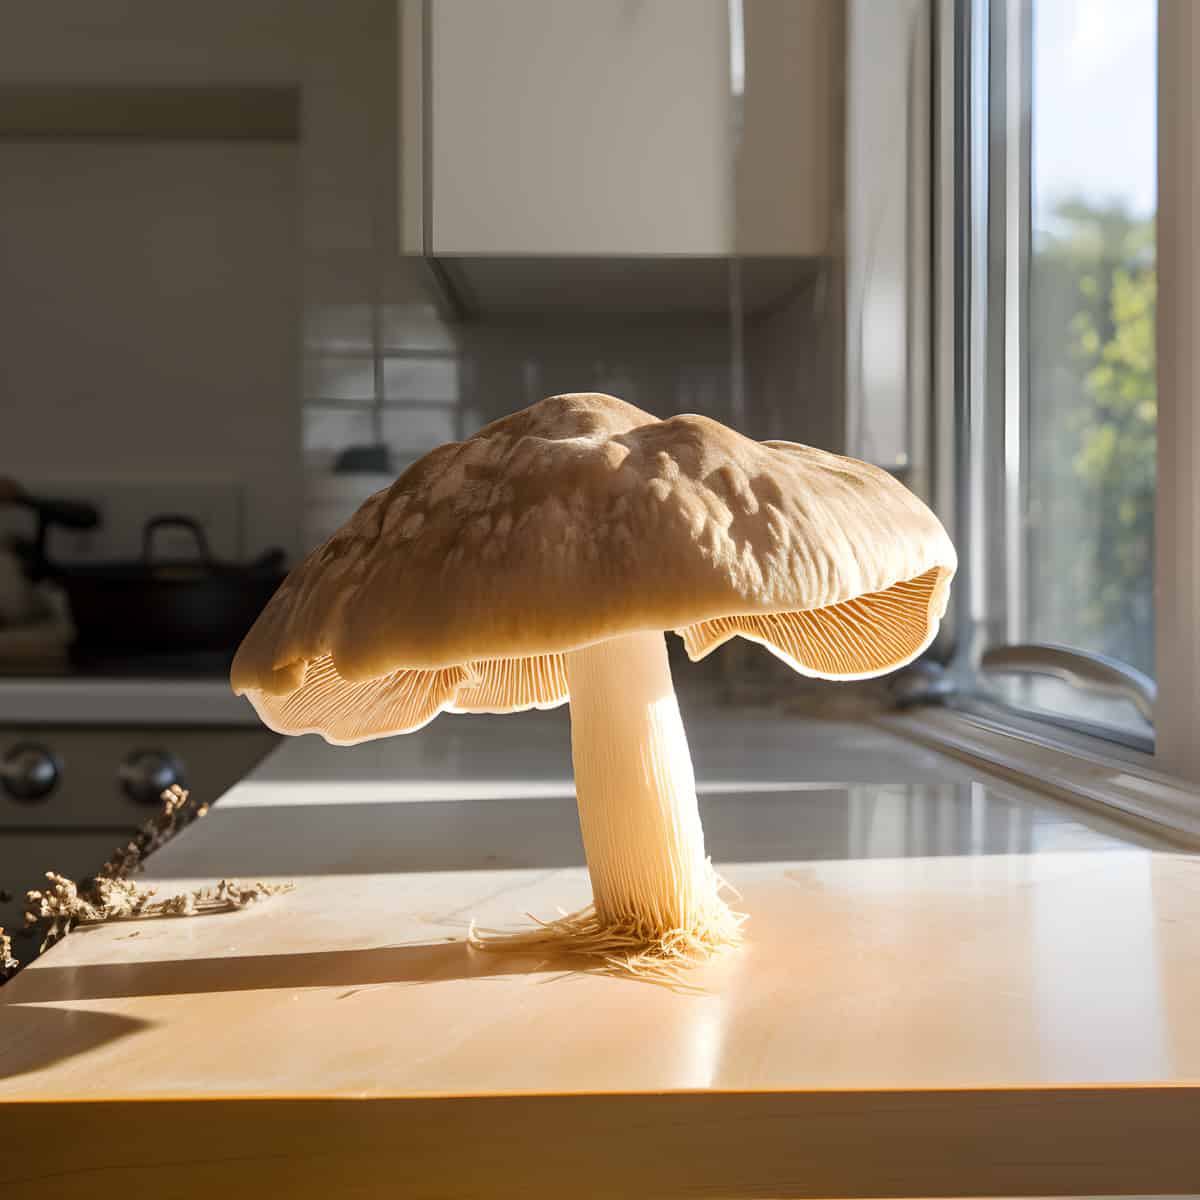 Poplar Mushrooms on a kitchen counter